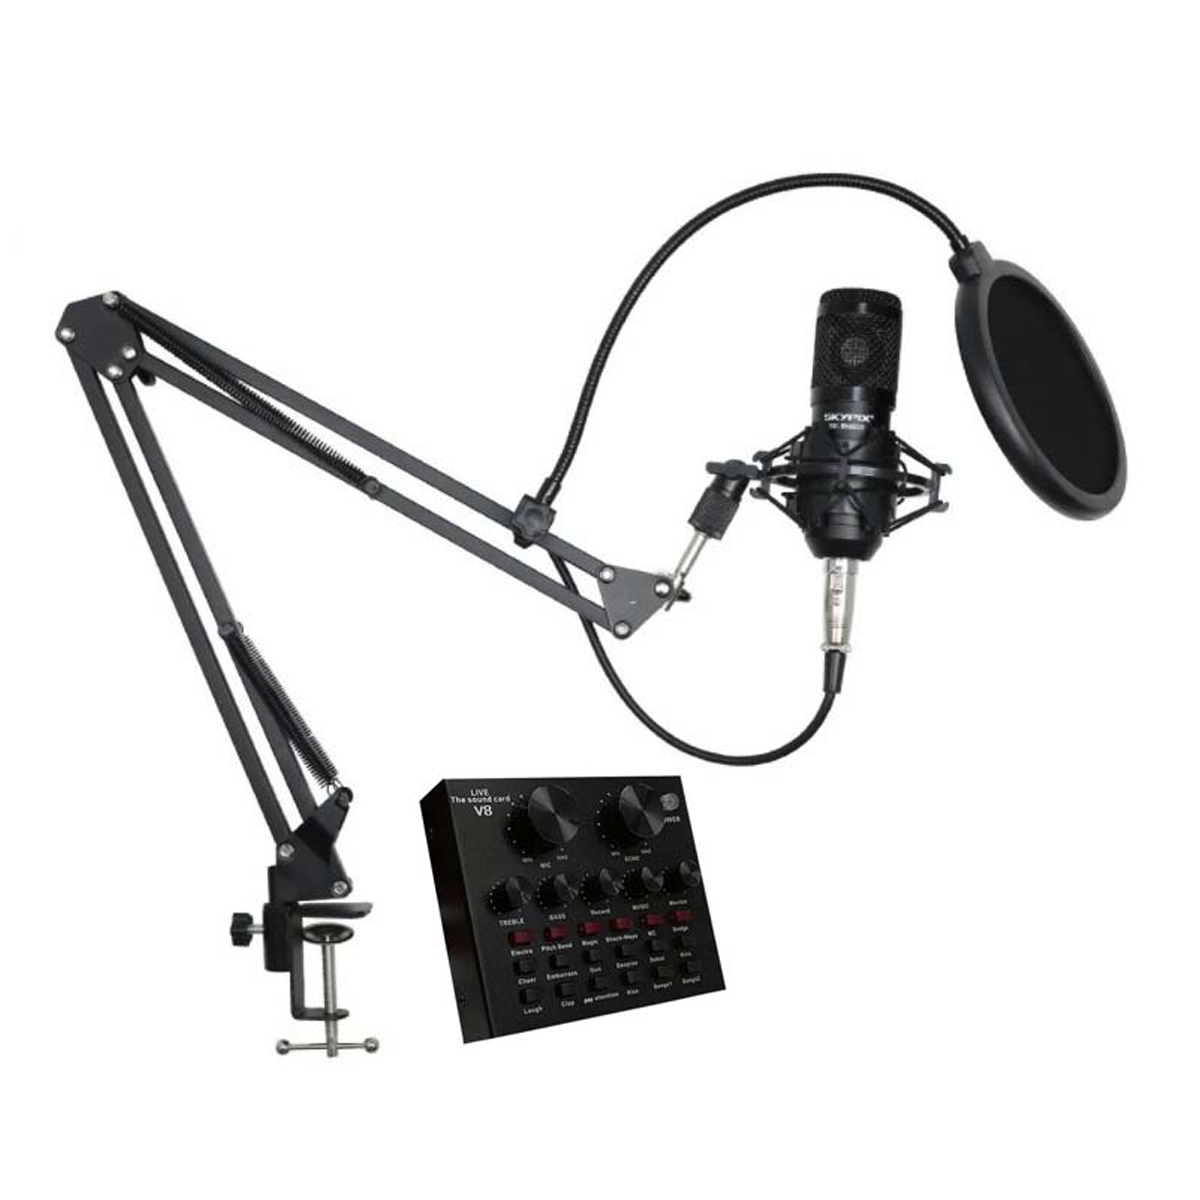 Kit Microfone, Interface e Suporte SKYPIX SK-BM800V8